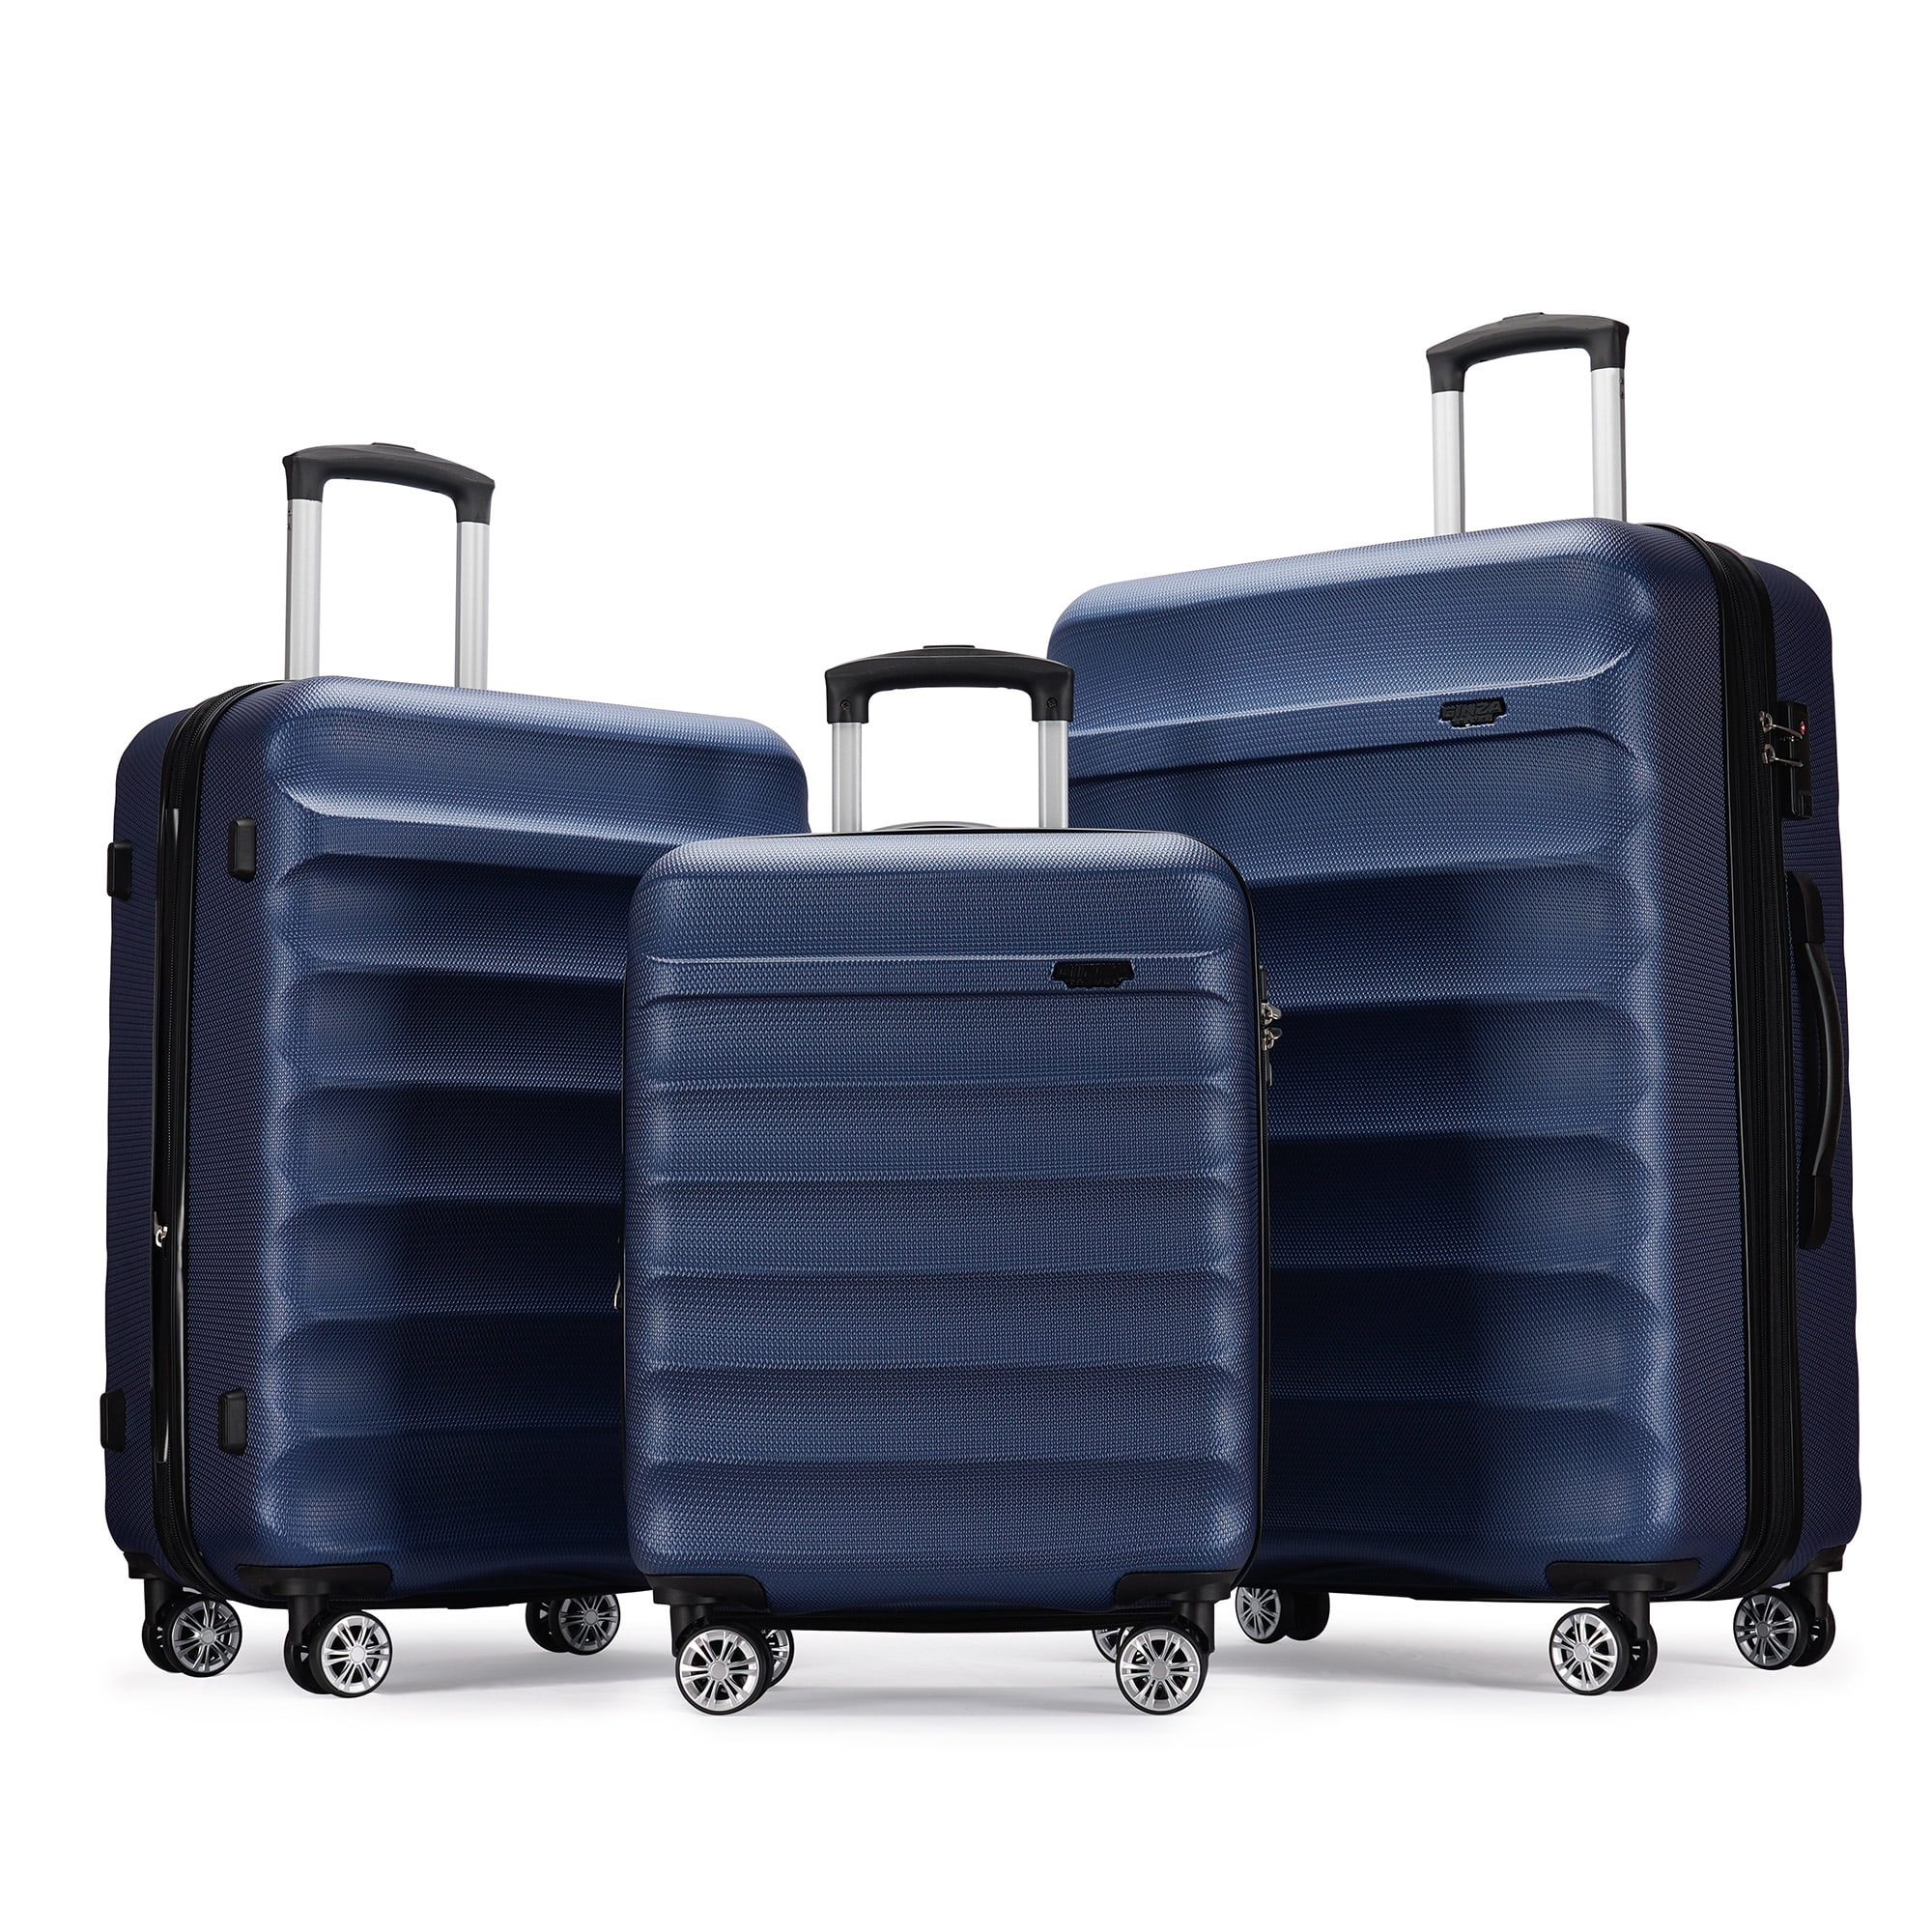 Ginza Travel 3 Piece Luggage Set Expandable ABS Hard Shell luggage Set ...